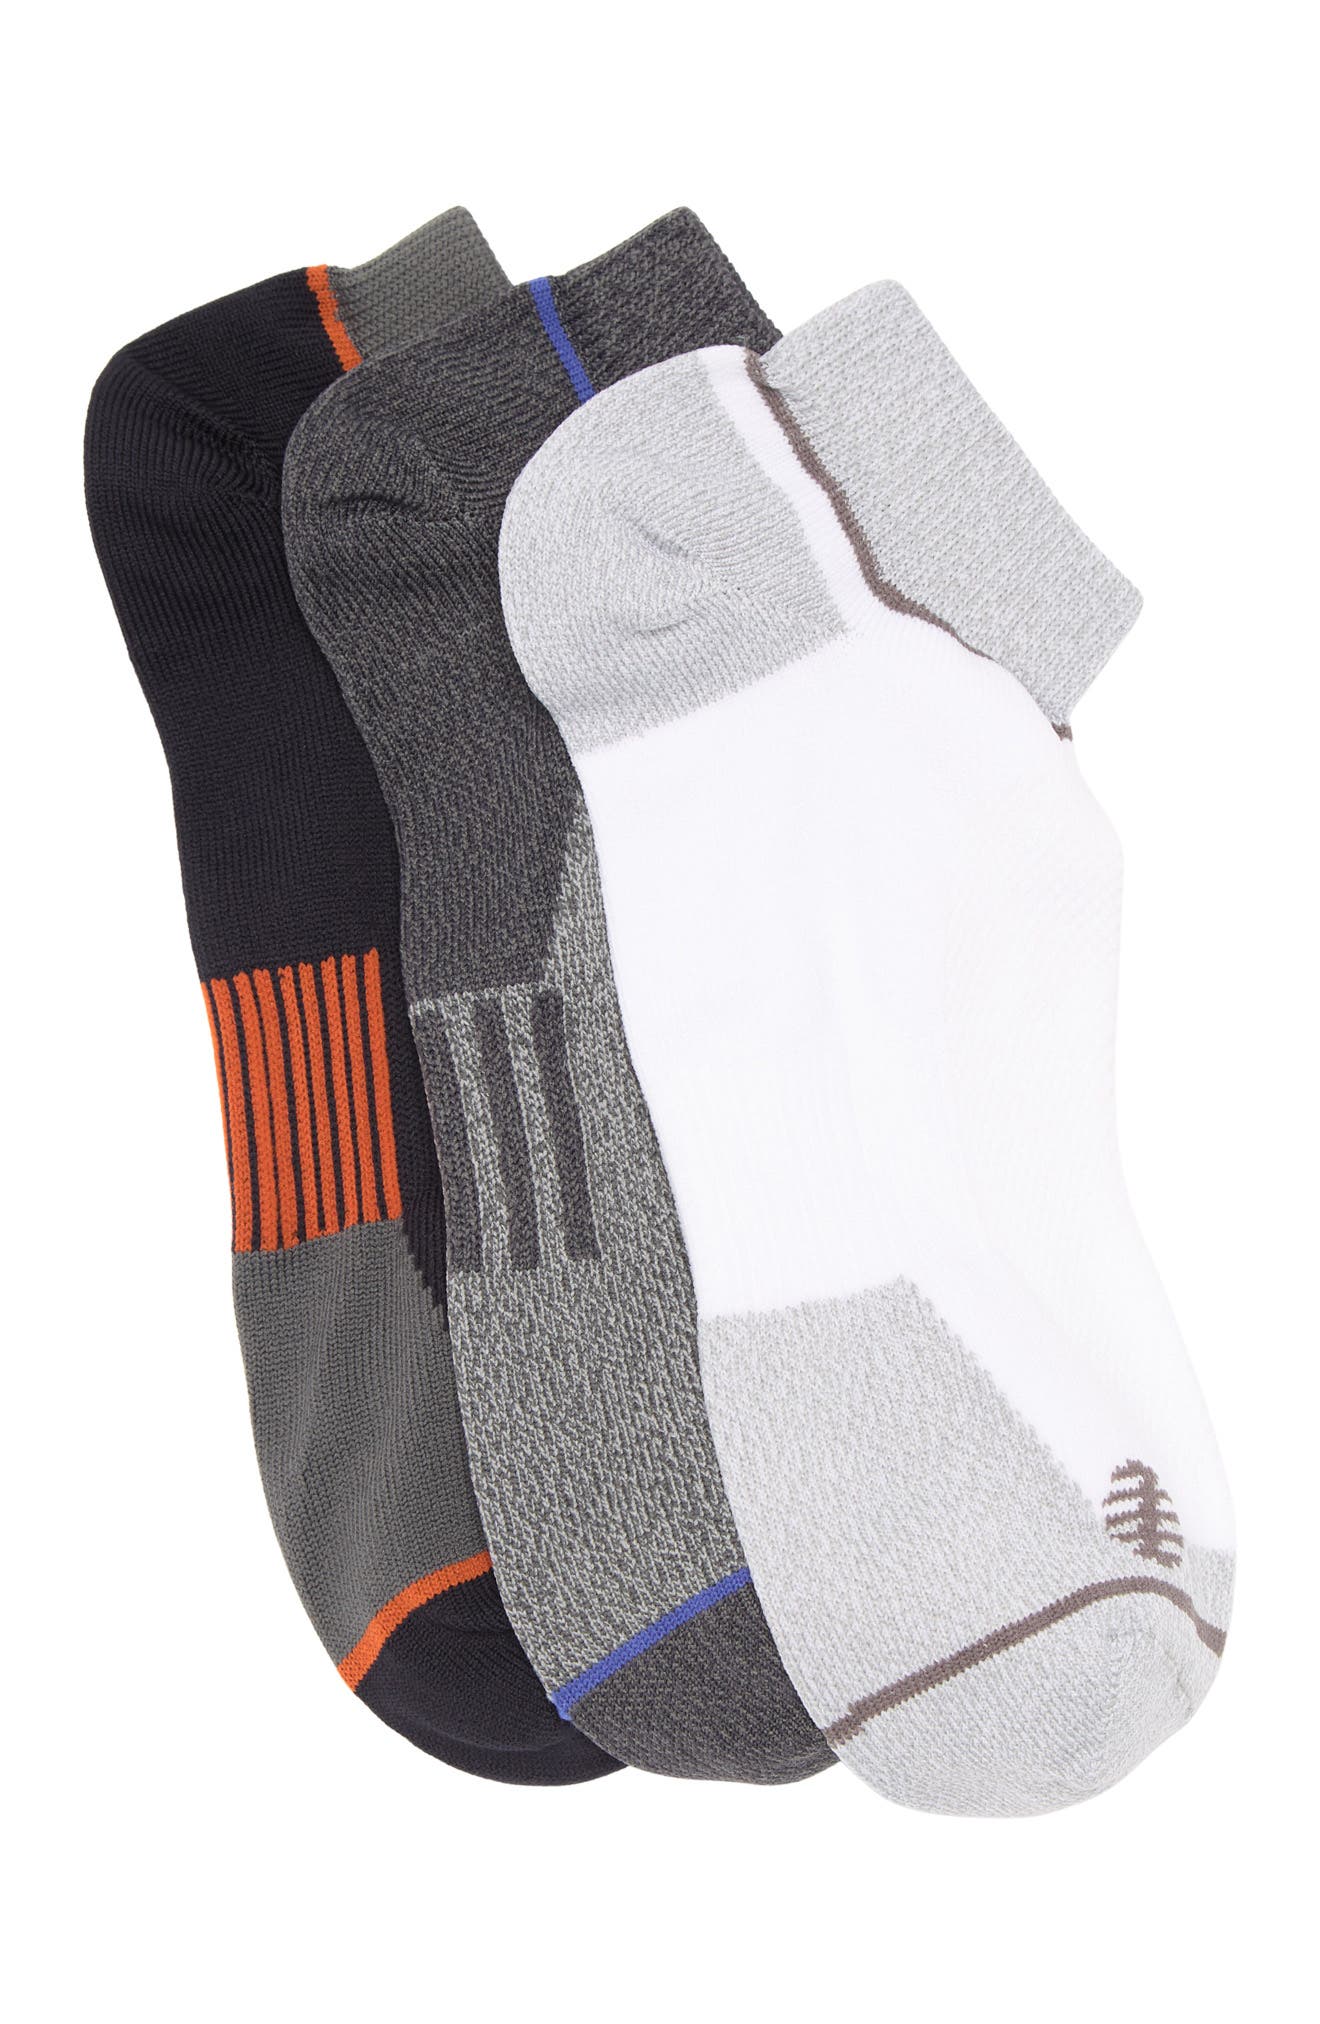 Z By Zella | Performance Ankle Socks - Pack of 3 | Nordstrom Rack